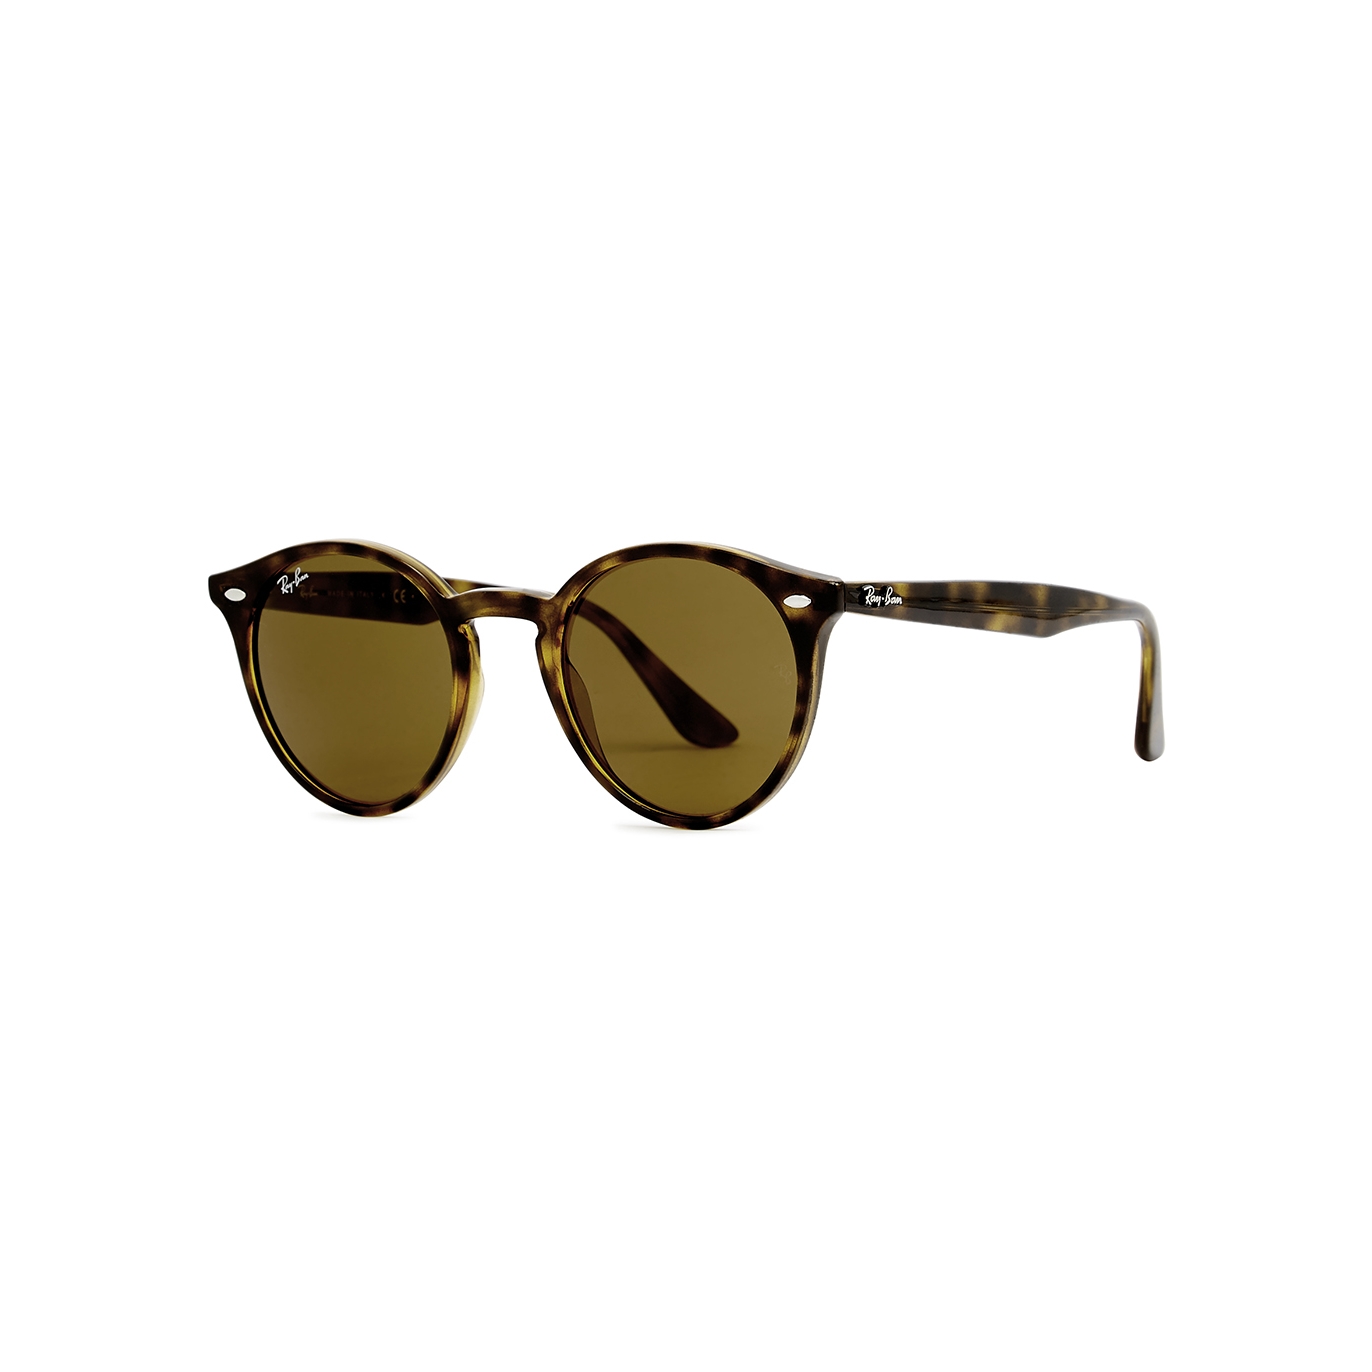 Ray-Ban Tortoiseshell Round-frame Sunglasses, Sunglasses, Brown